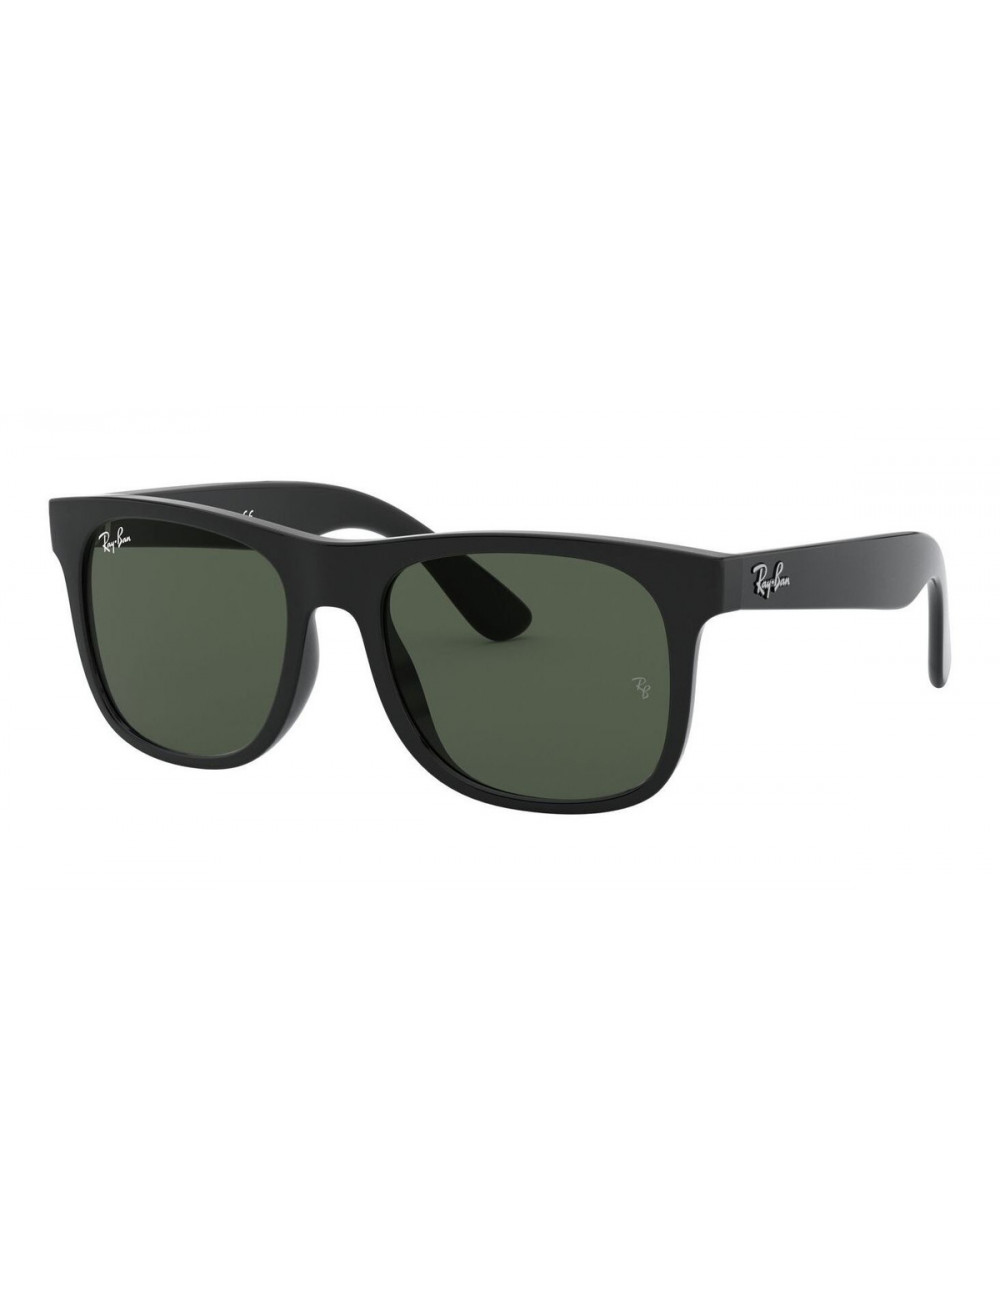 Ray-Ban Junior RJ9565S - Jack Kids Sunglasses | FramesDirect.com